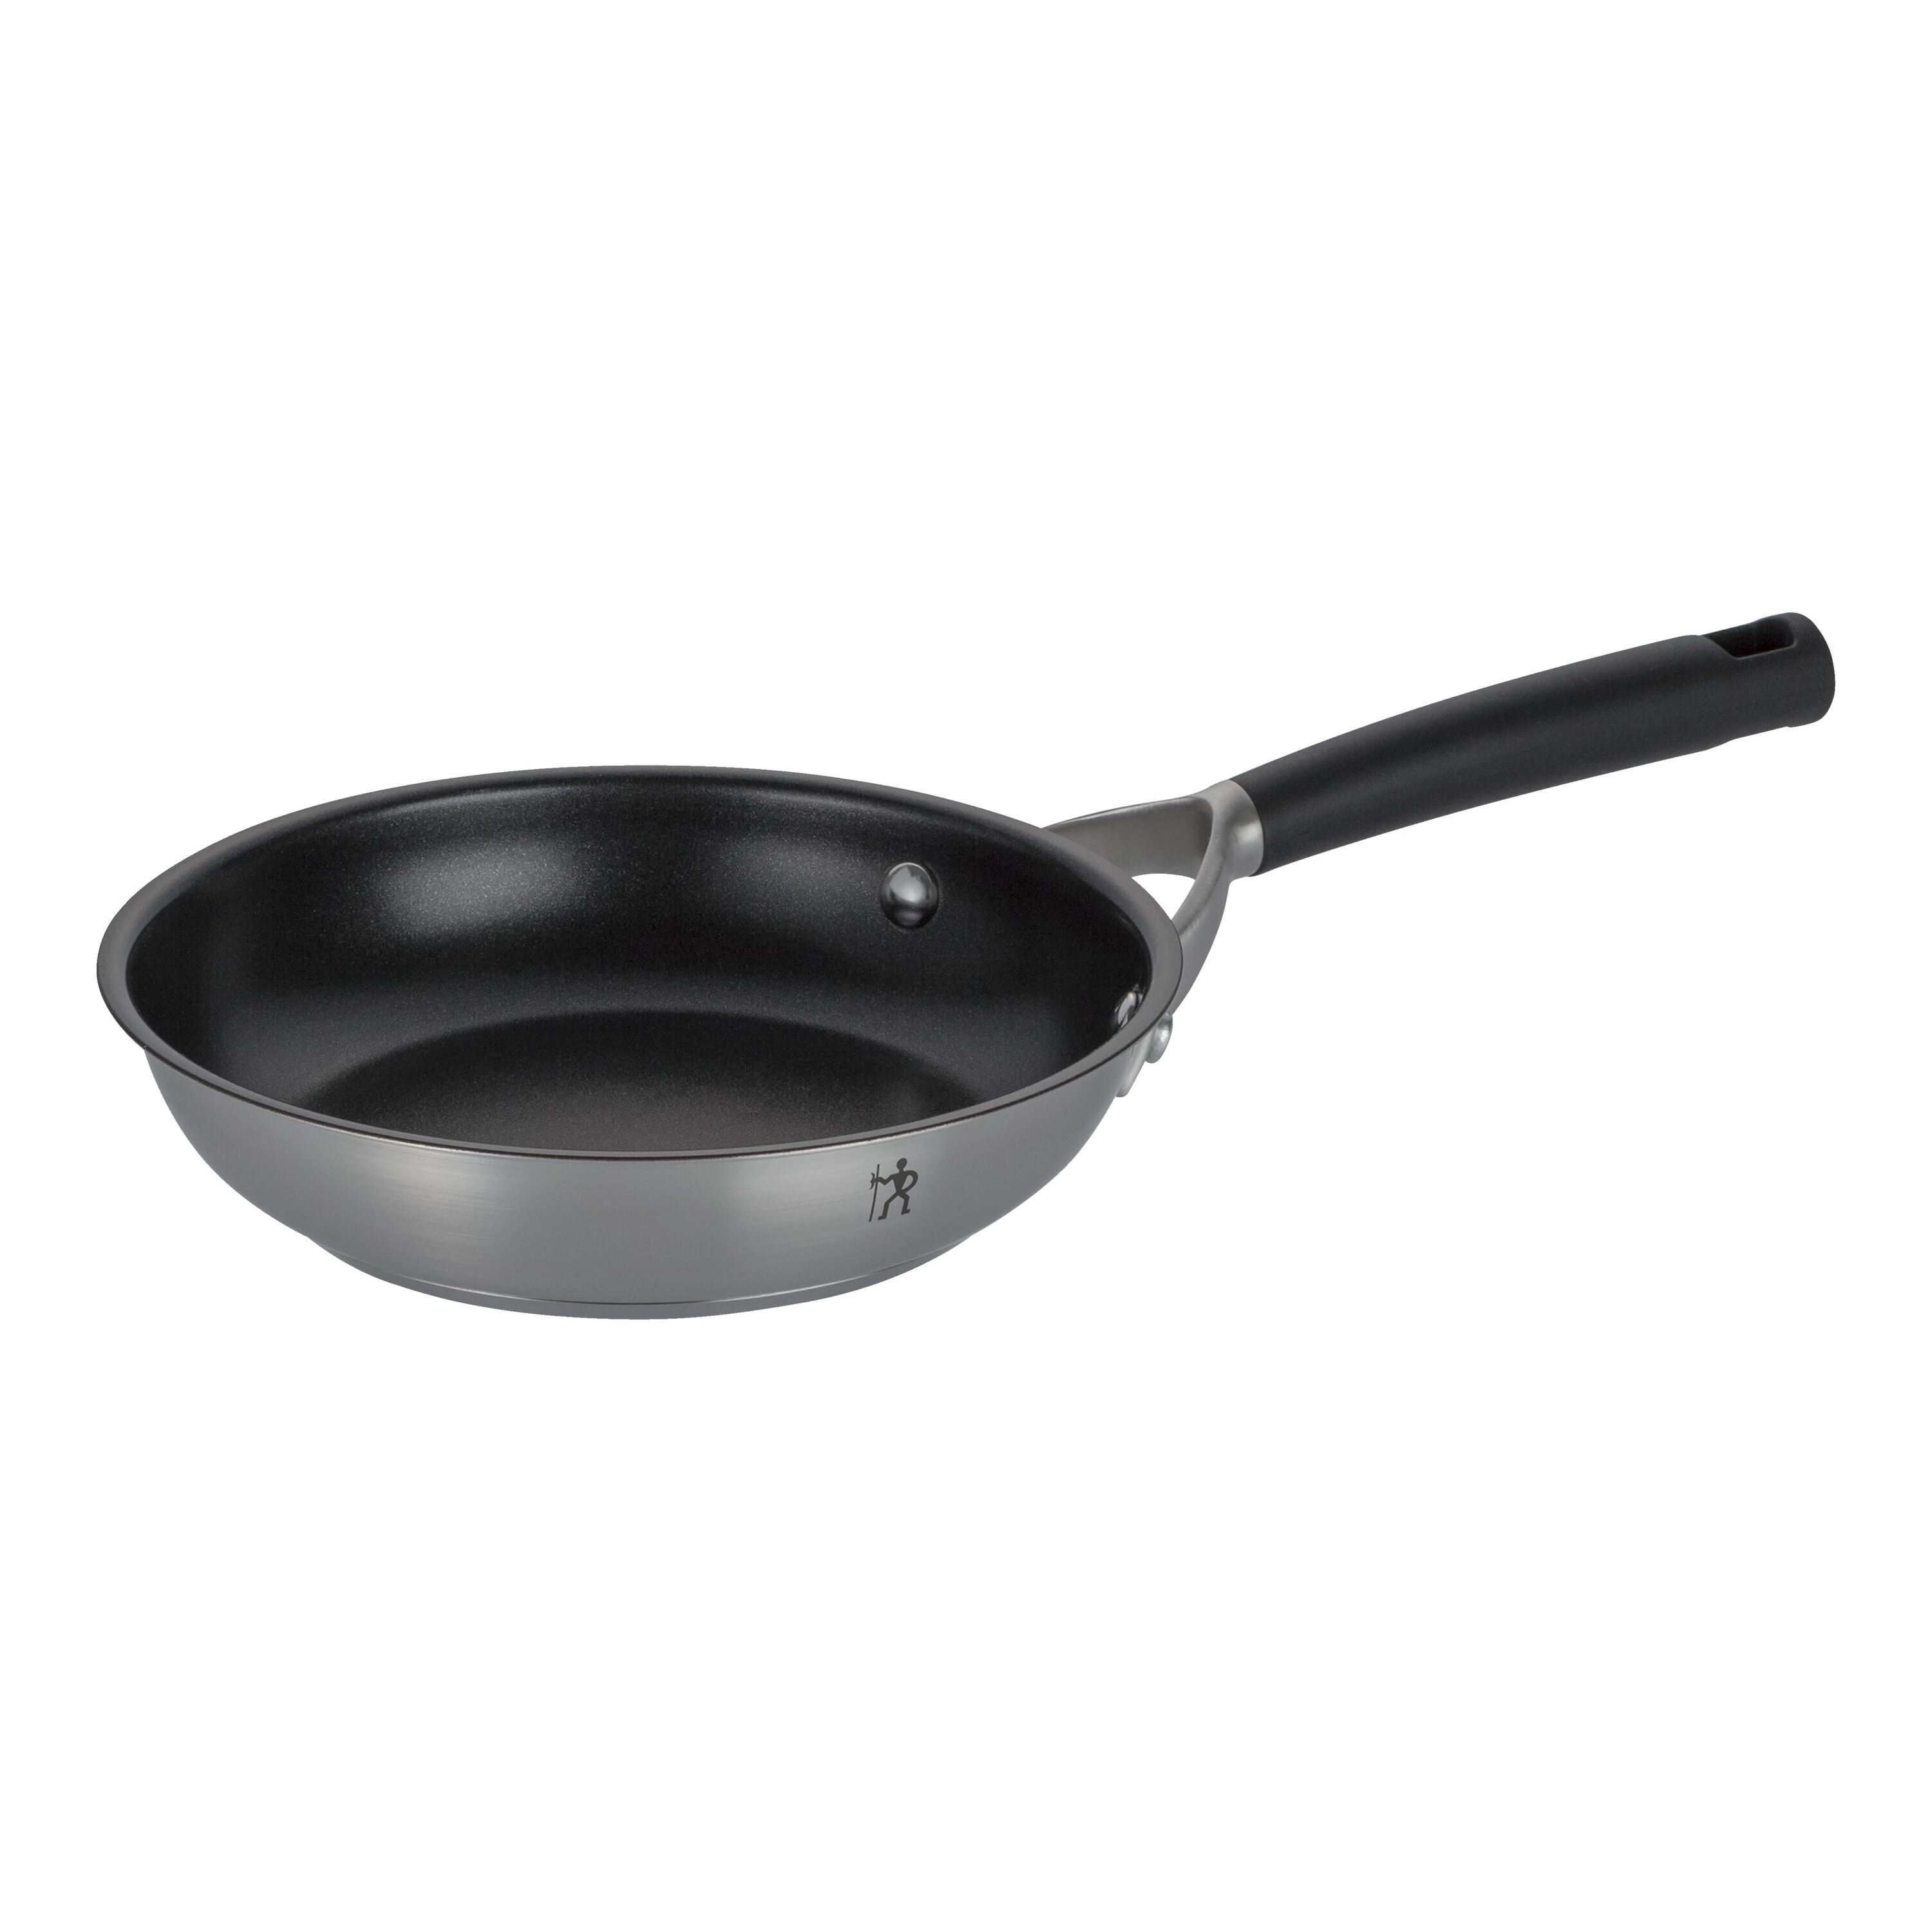 20 inch non stick frying pan